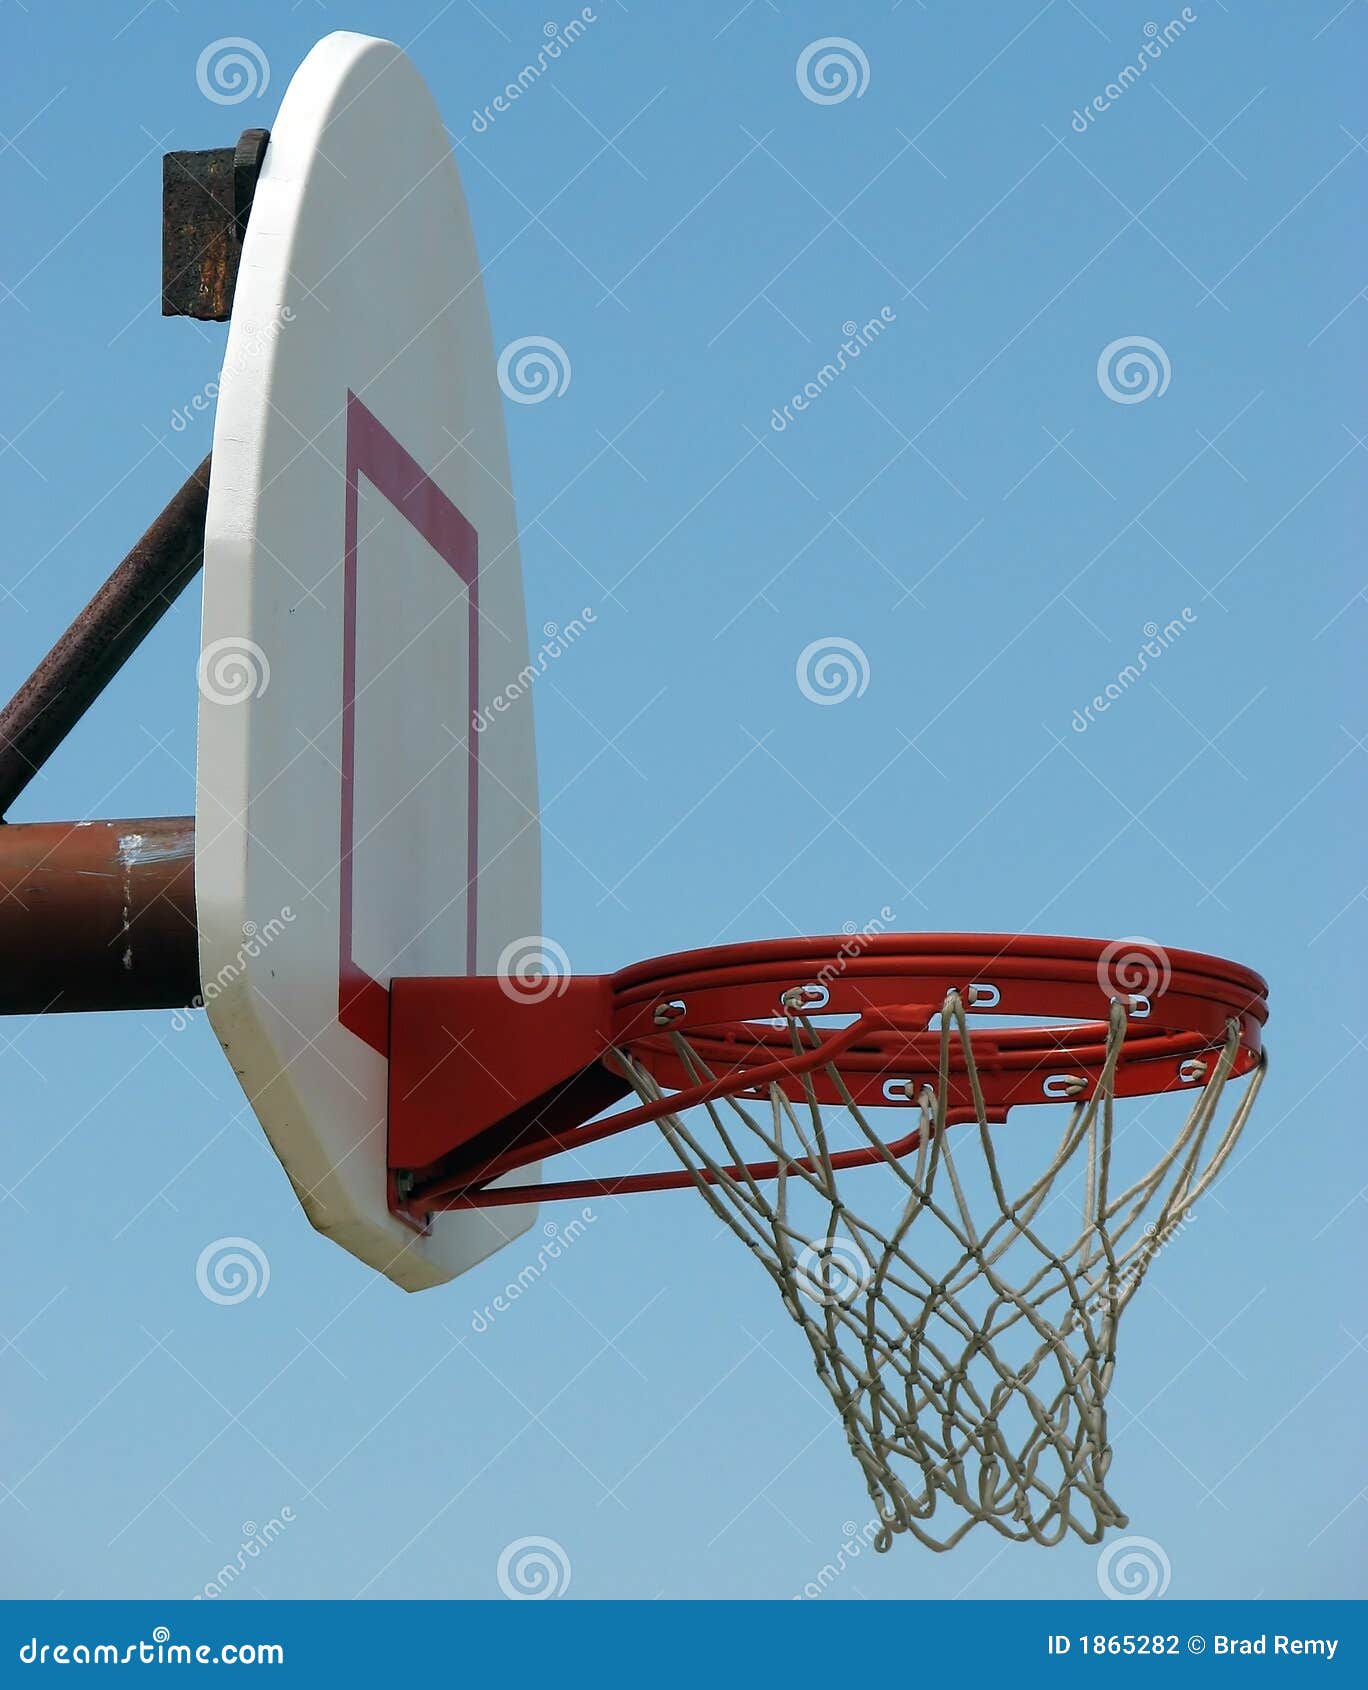 side view nba basketball hoop